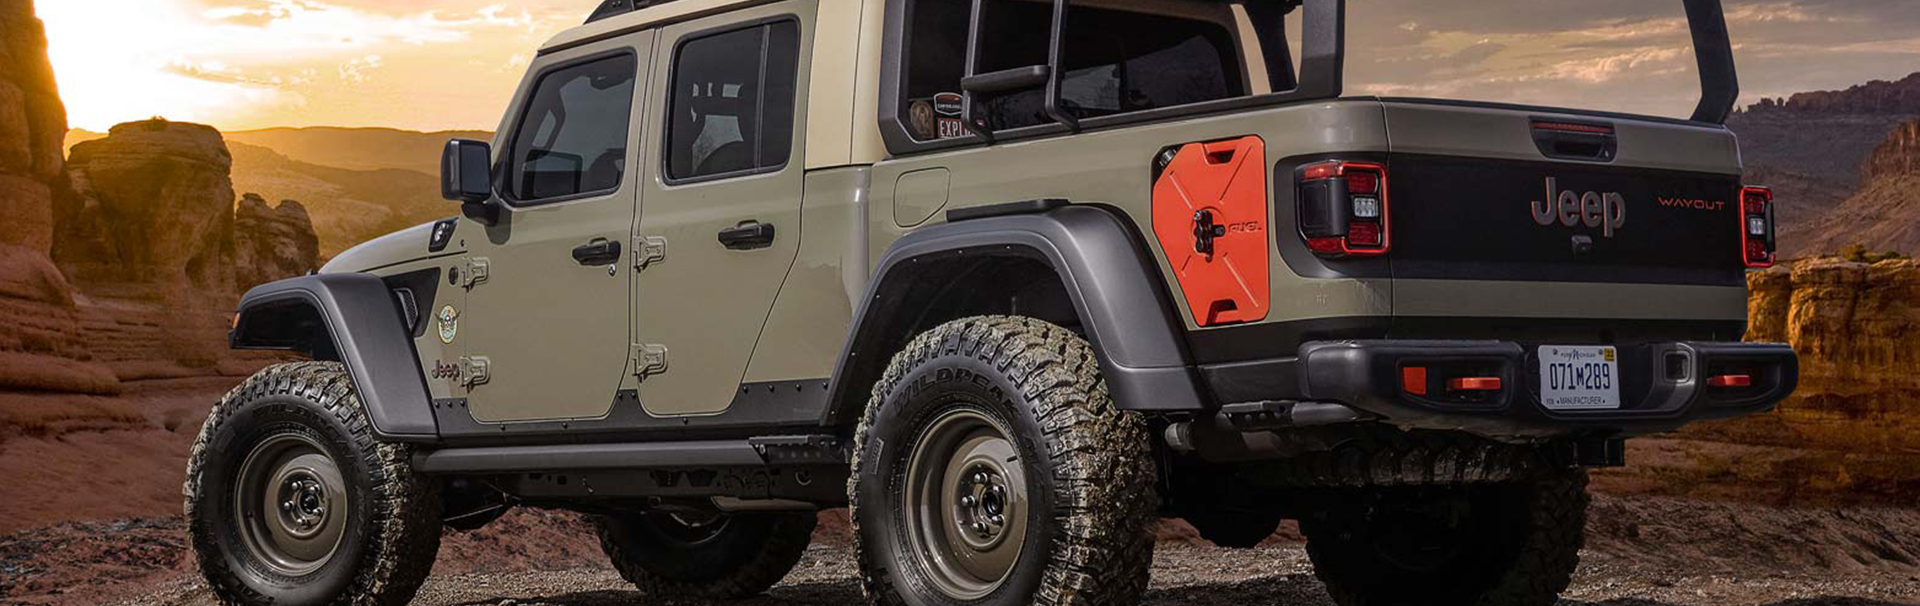 Easter Jeep Safari: 6 concepts around the Gladiator